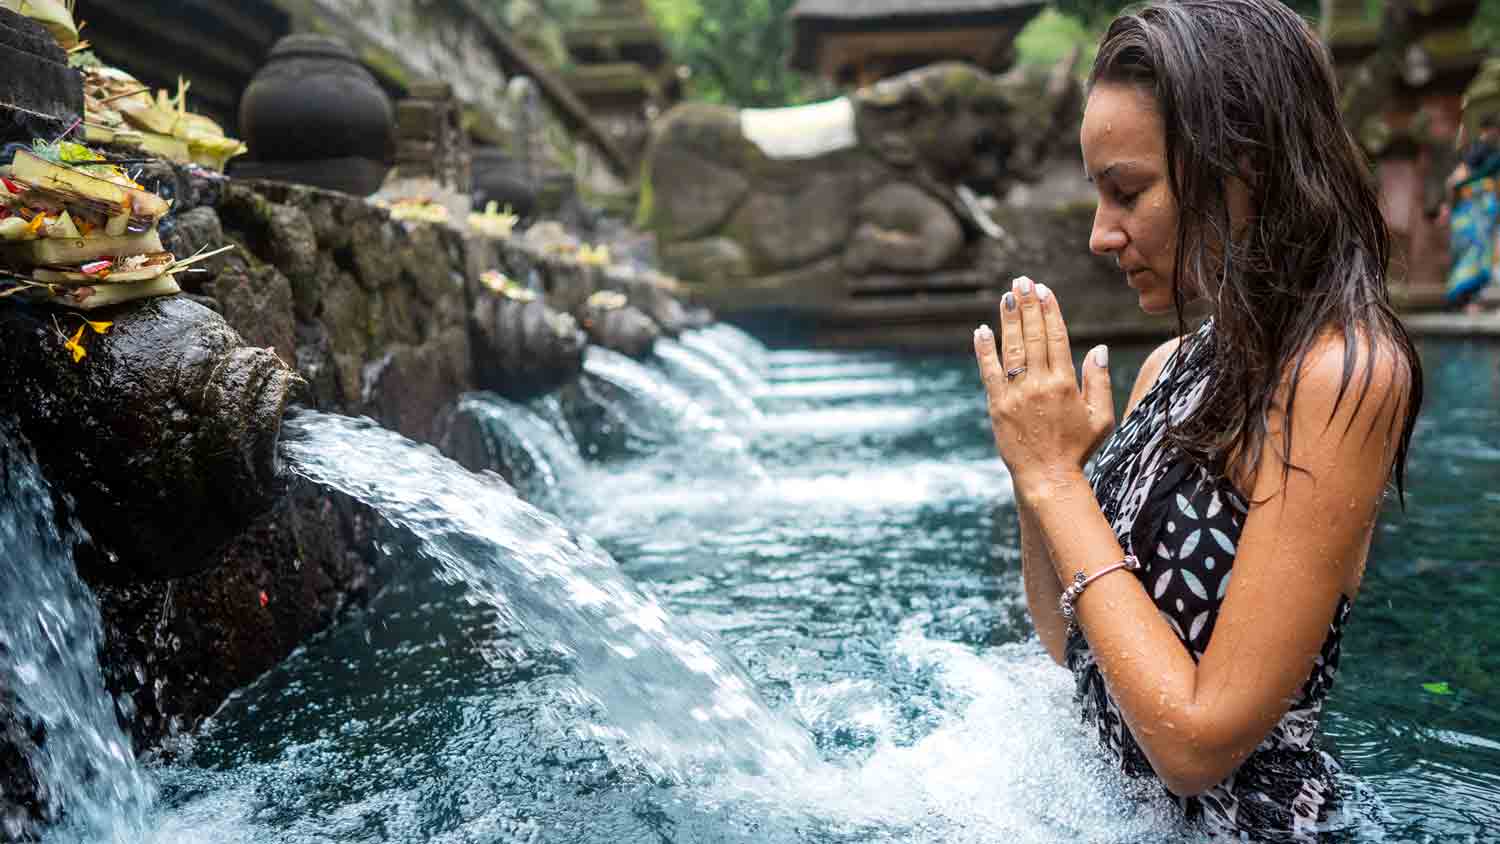 Praying at a Balinese water temple